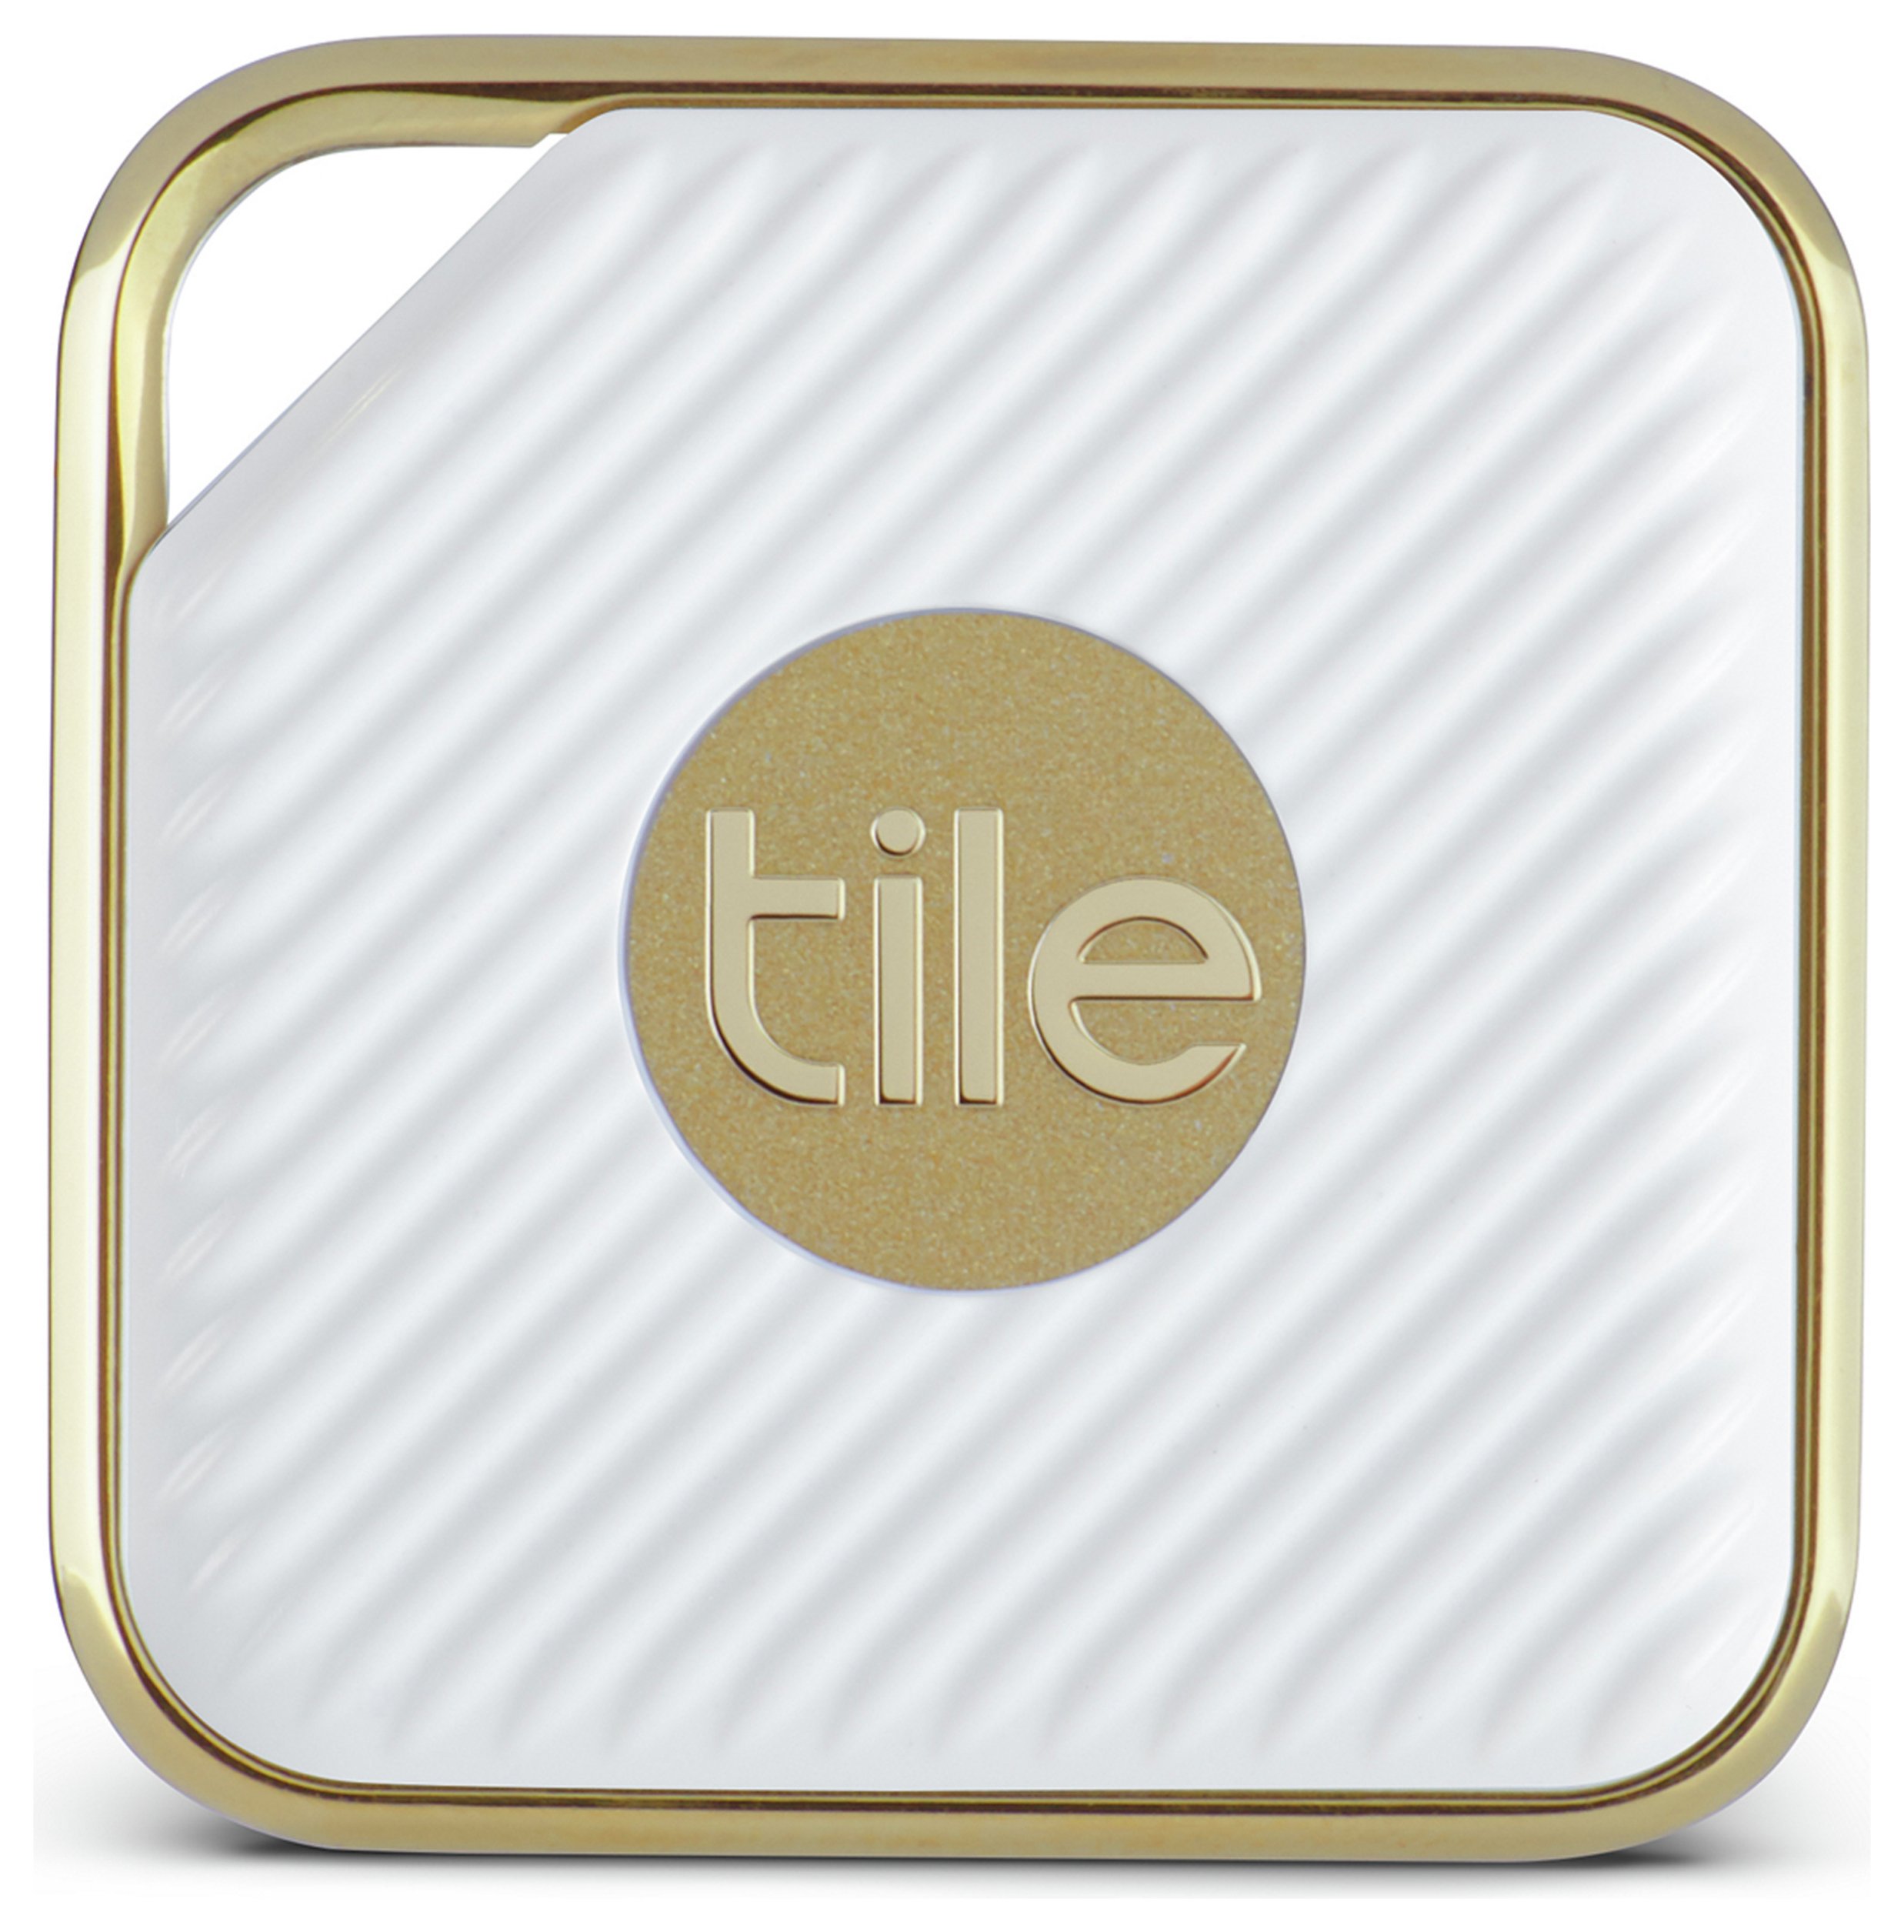 UPC 819039020015 product image for Tile Style Bluetooth Key/Item /Phone Finder | upcitemdb.com